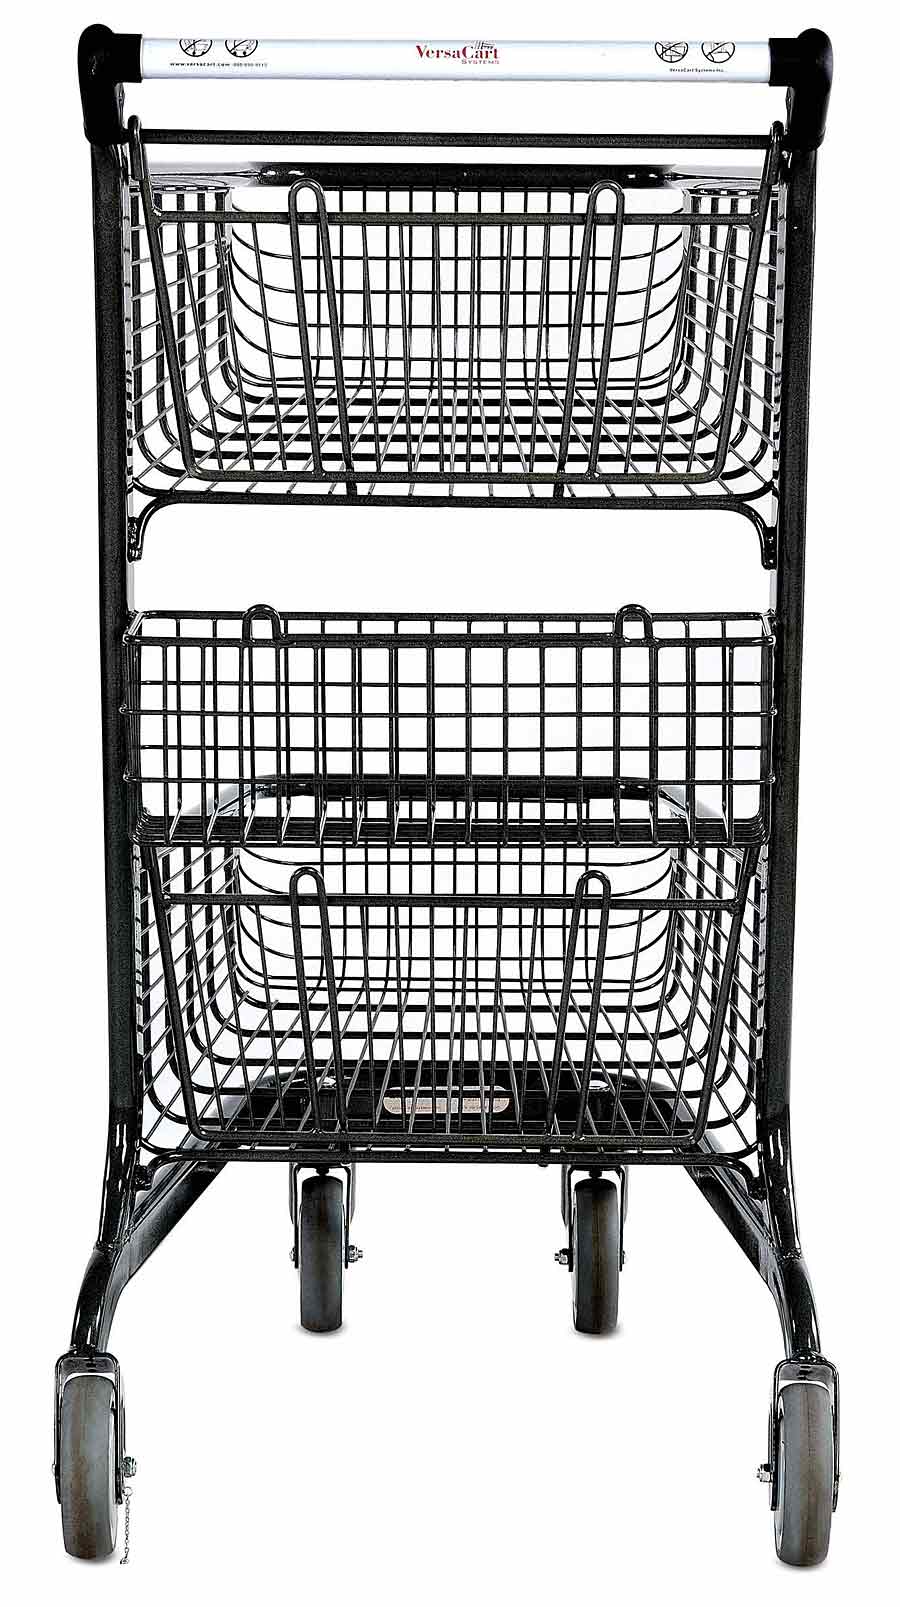 EXpress6000 Metal Grocery Shopping Cart